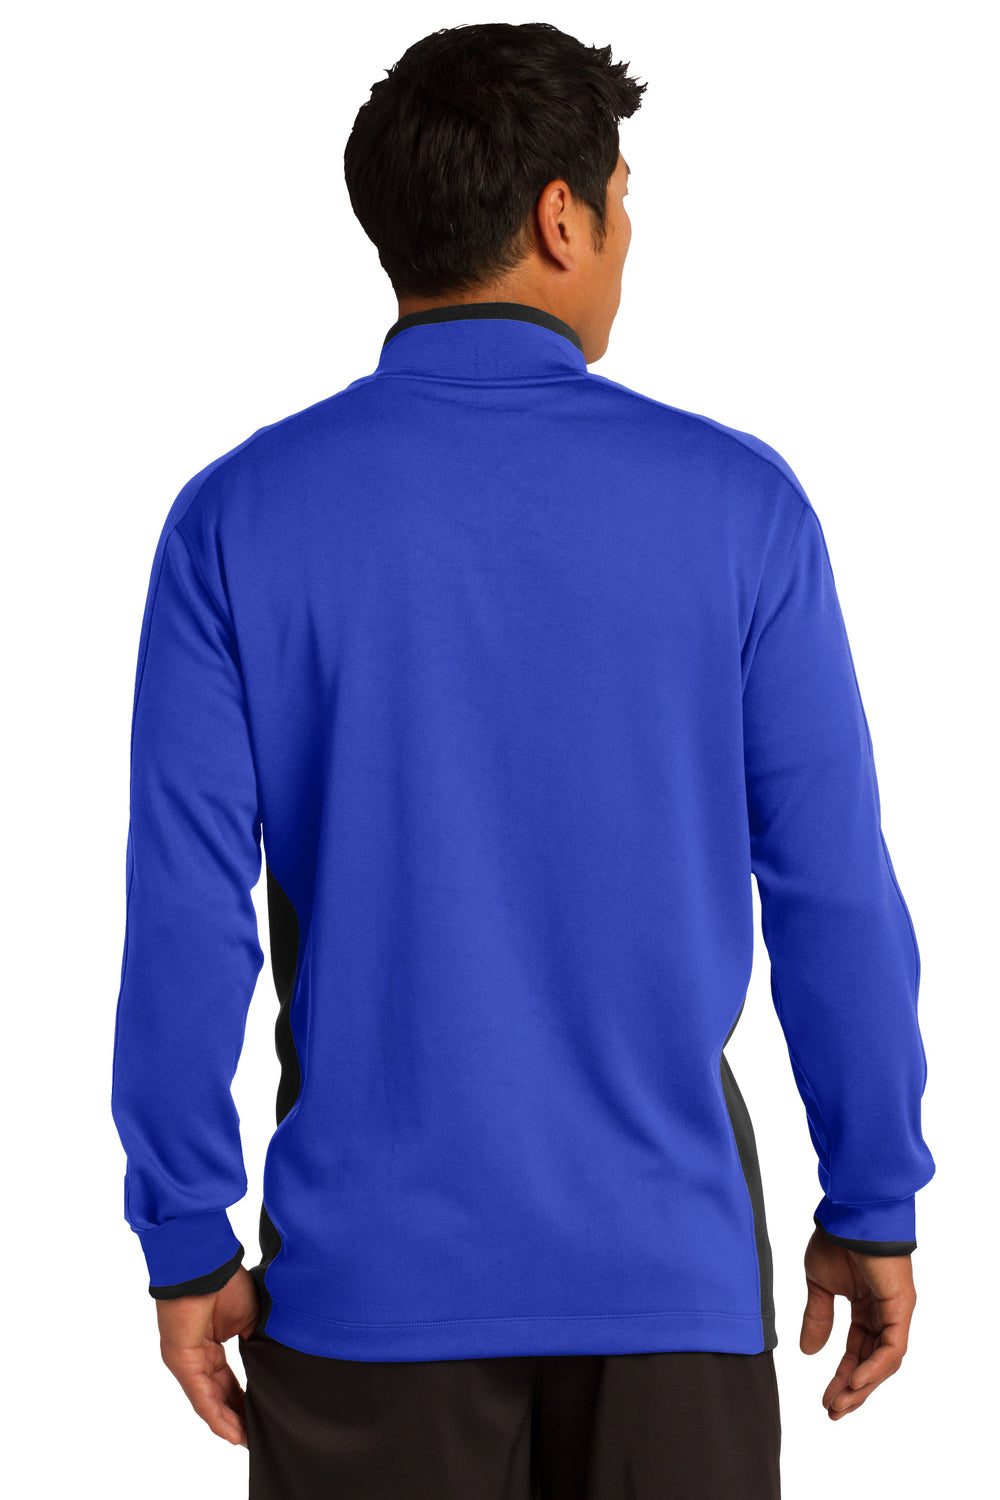 Nike 578673 Mens Dri-Fit Moisture Wicking 1/4 Zip Sweatshirt Royal Blue/Black/White Model Back